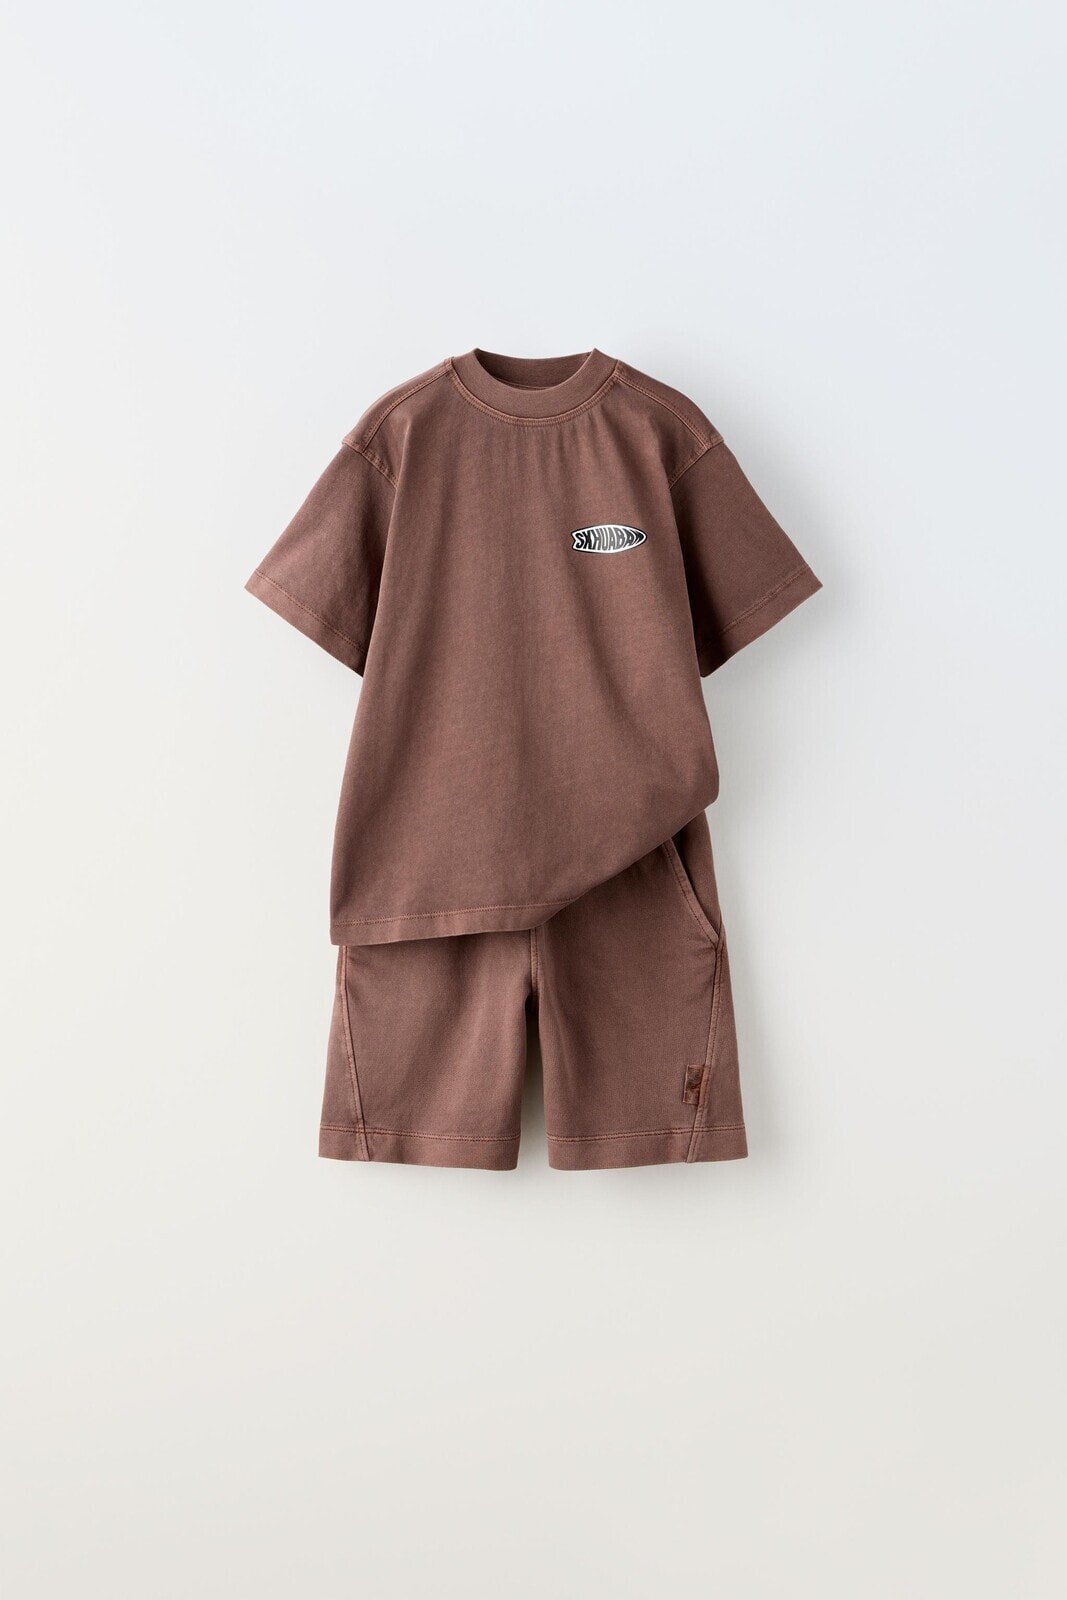 Garment dye t-shirt and bermuda shorts co-ord